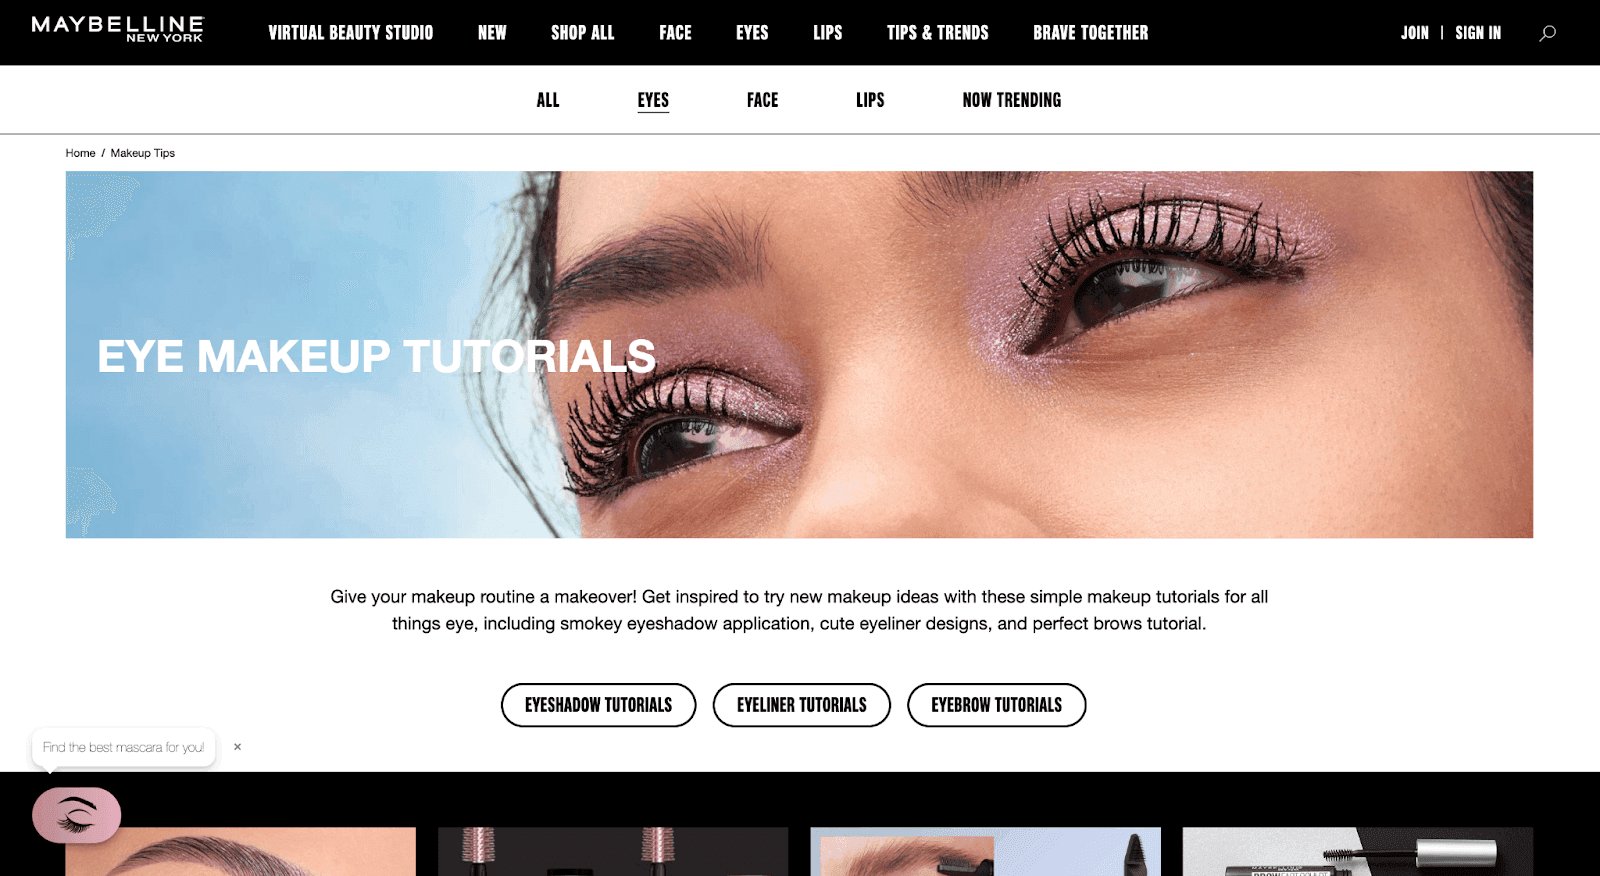 Maybelline website containing eye makeup tutorials